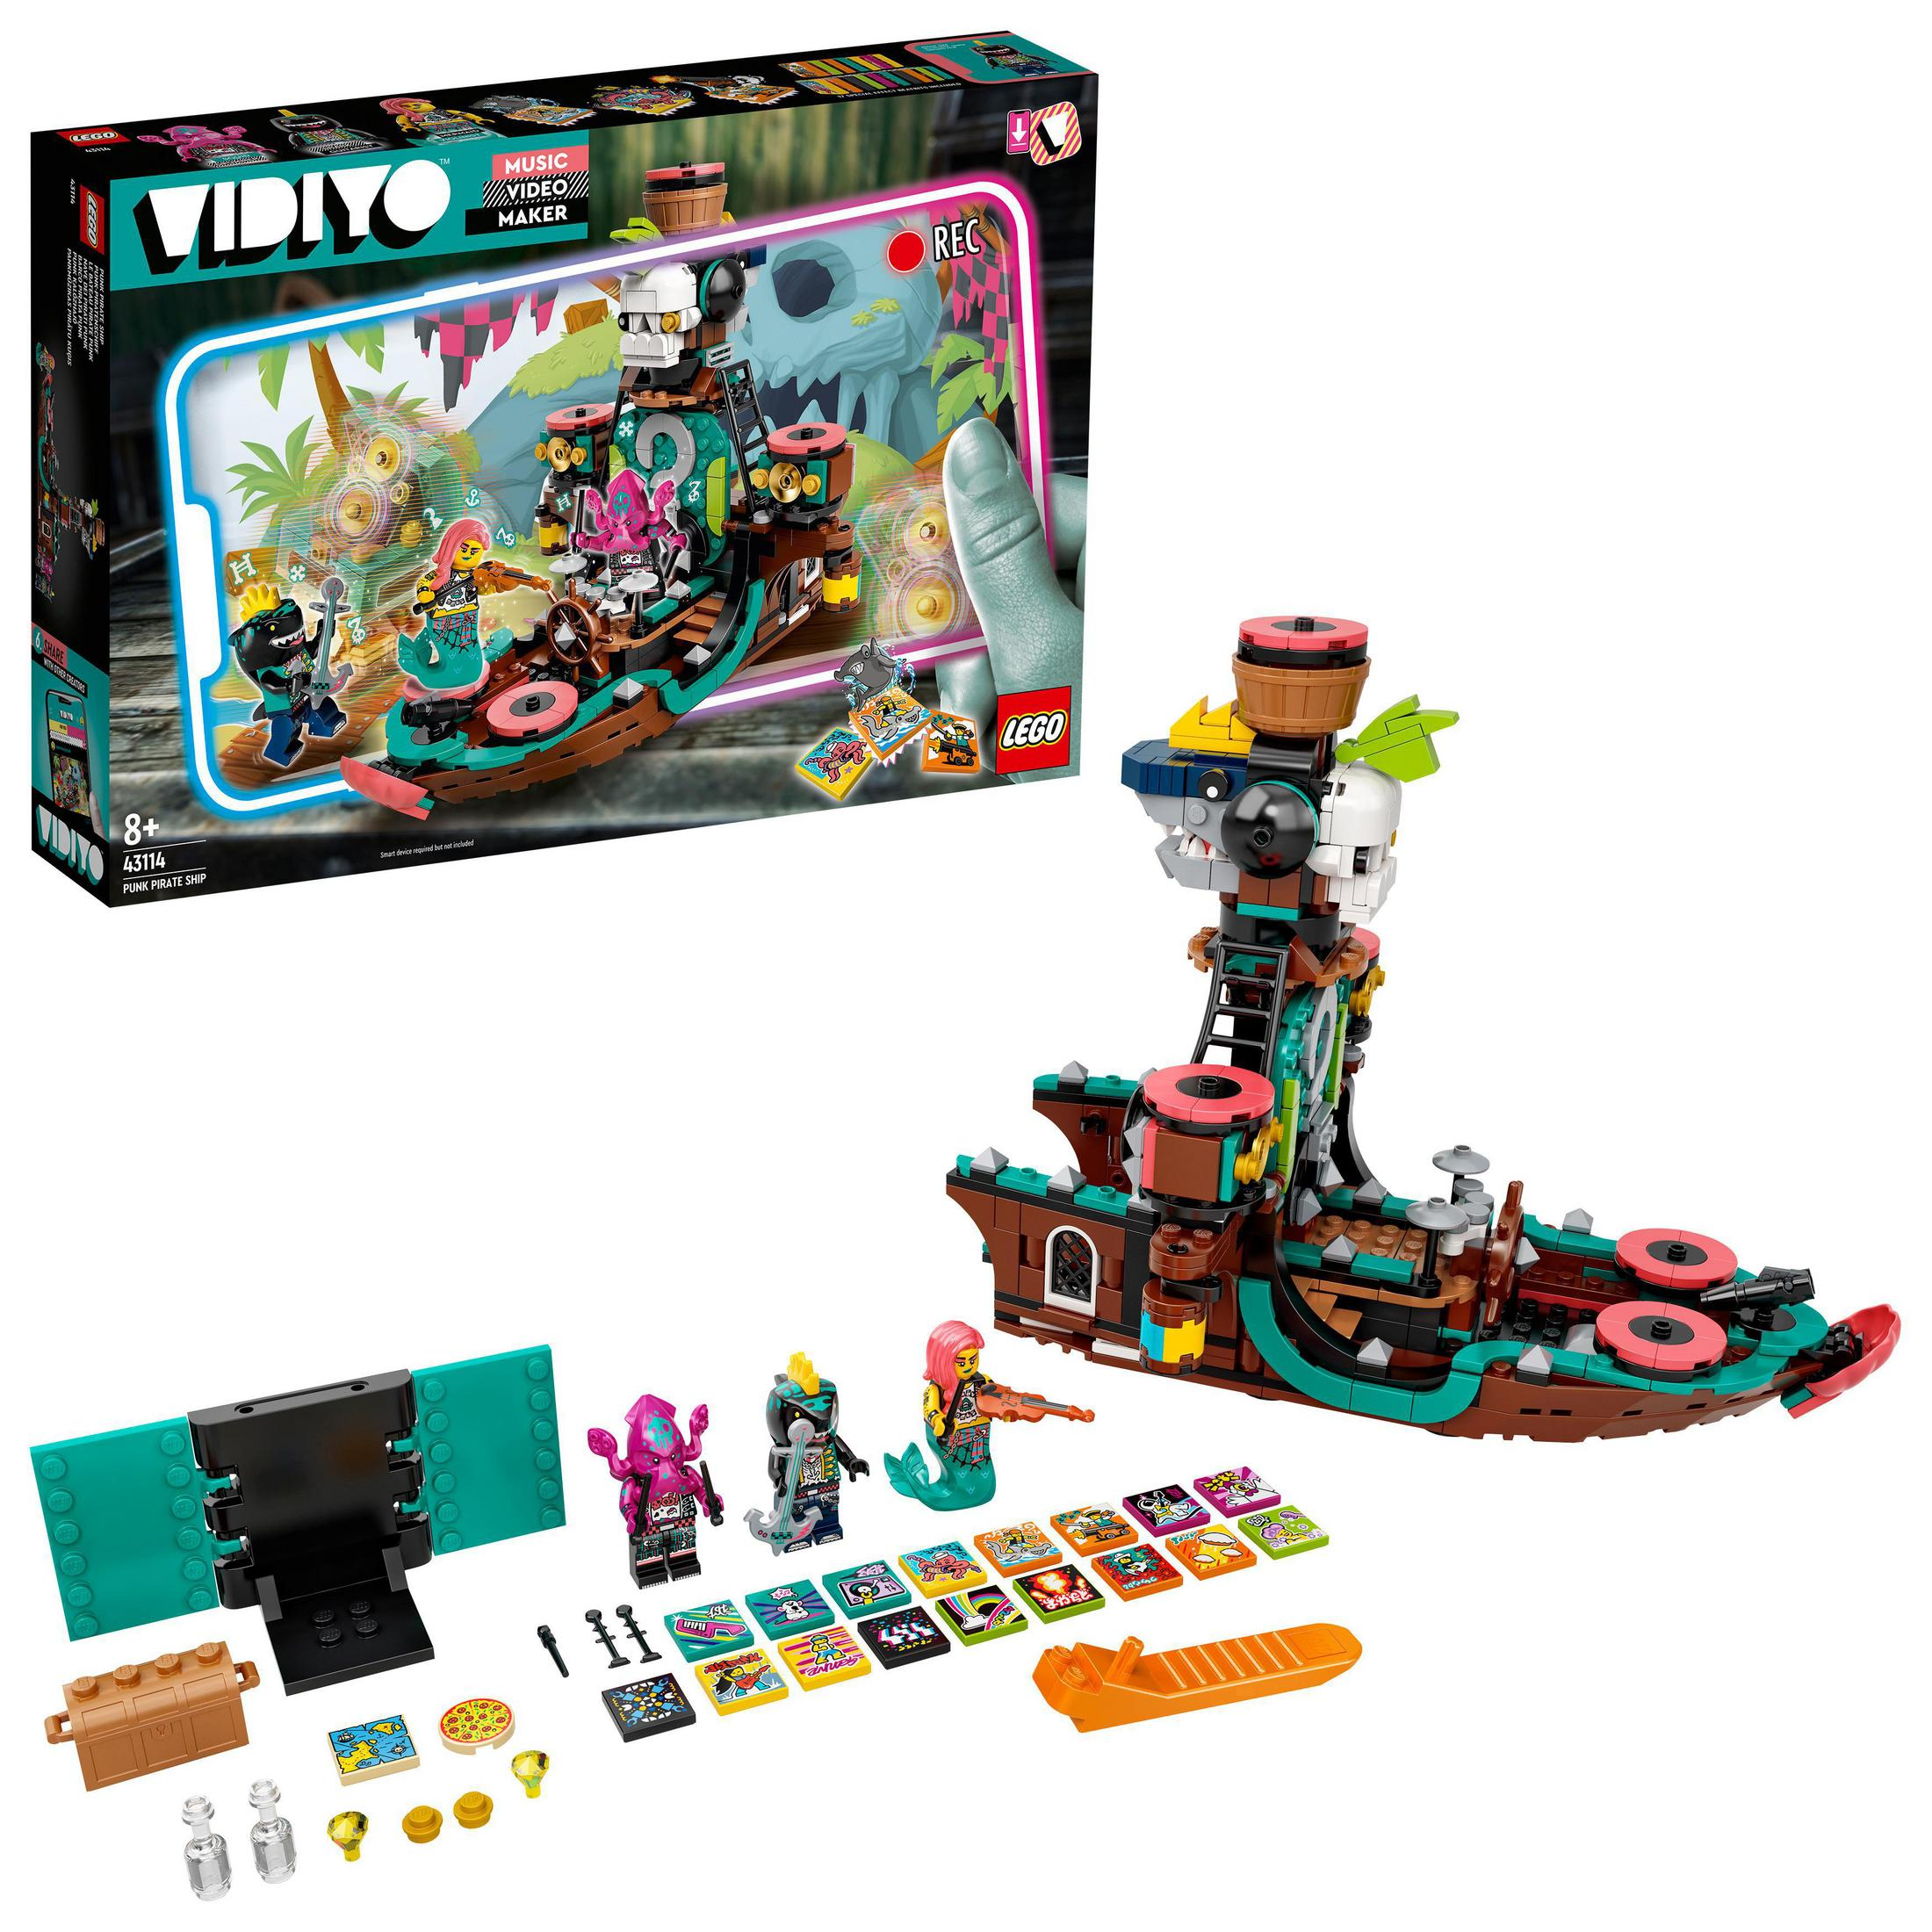 LEGO 43114 SHIP PIRATE Mehrfarbig Bausatz, PUNK